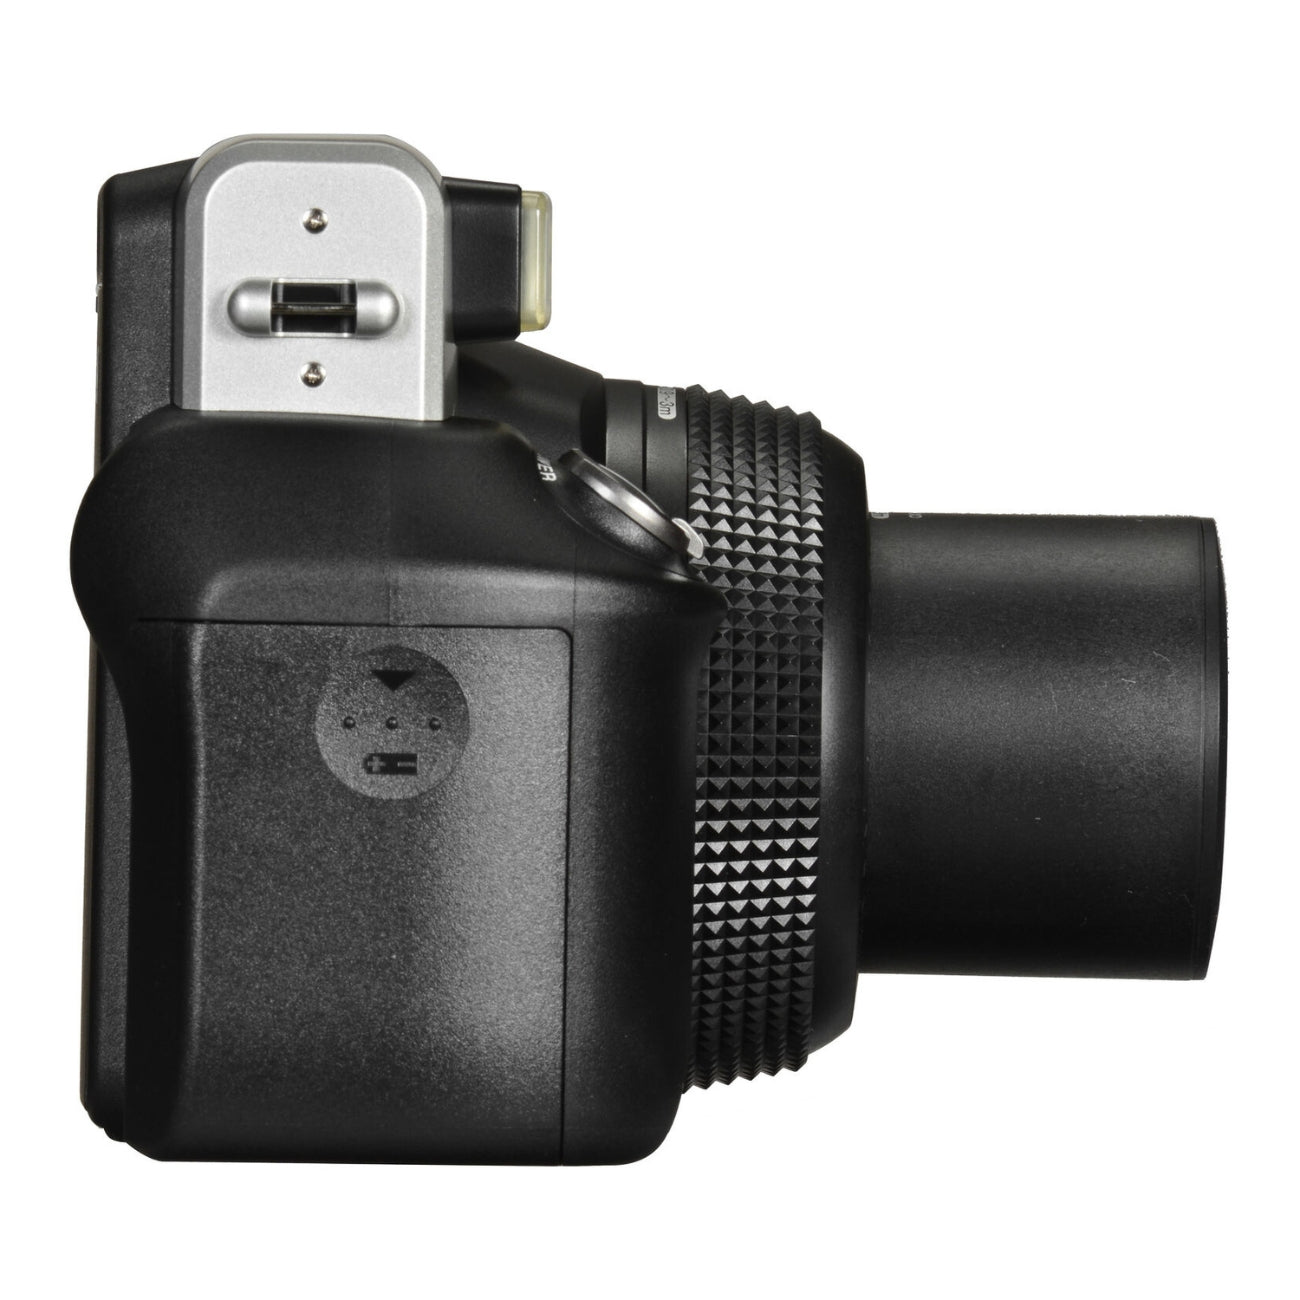 Fujifilm Instax Wide 300 Instant Film Camera (Black) - Side View